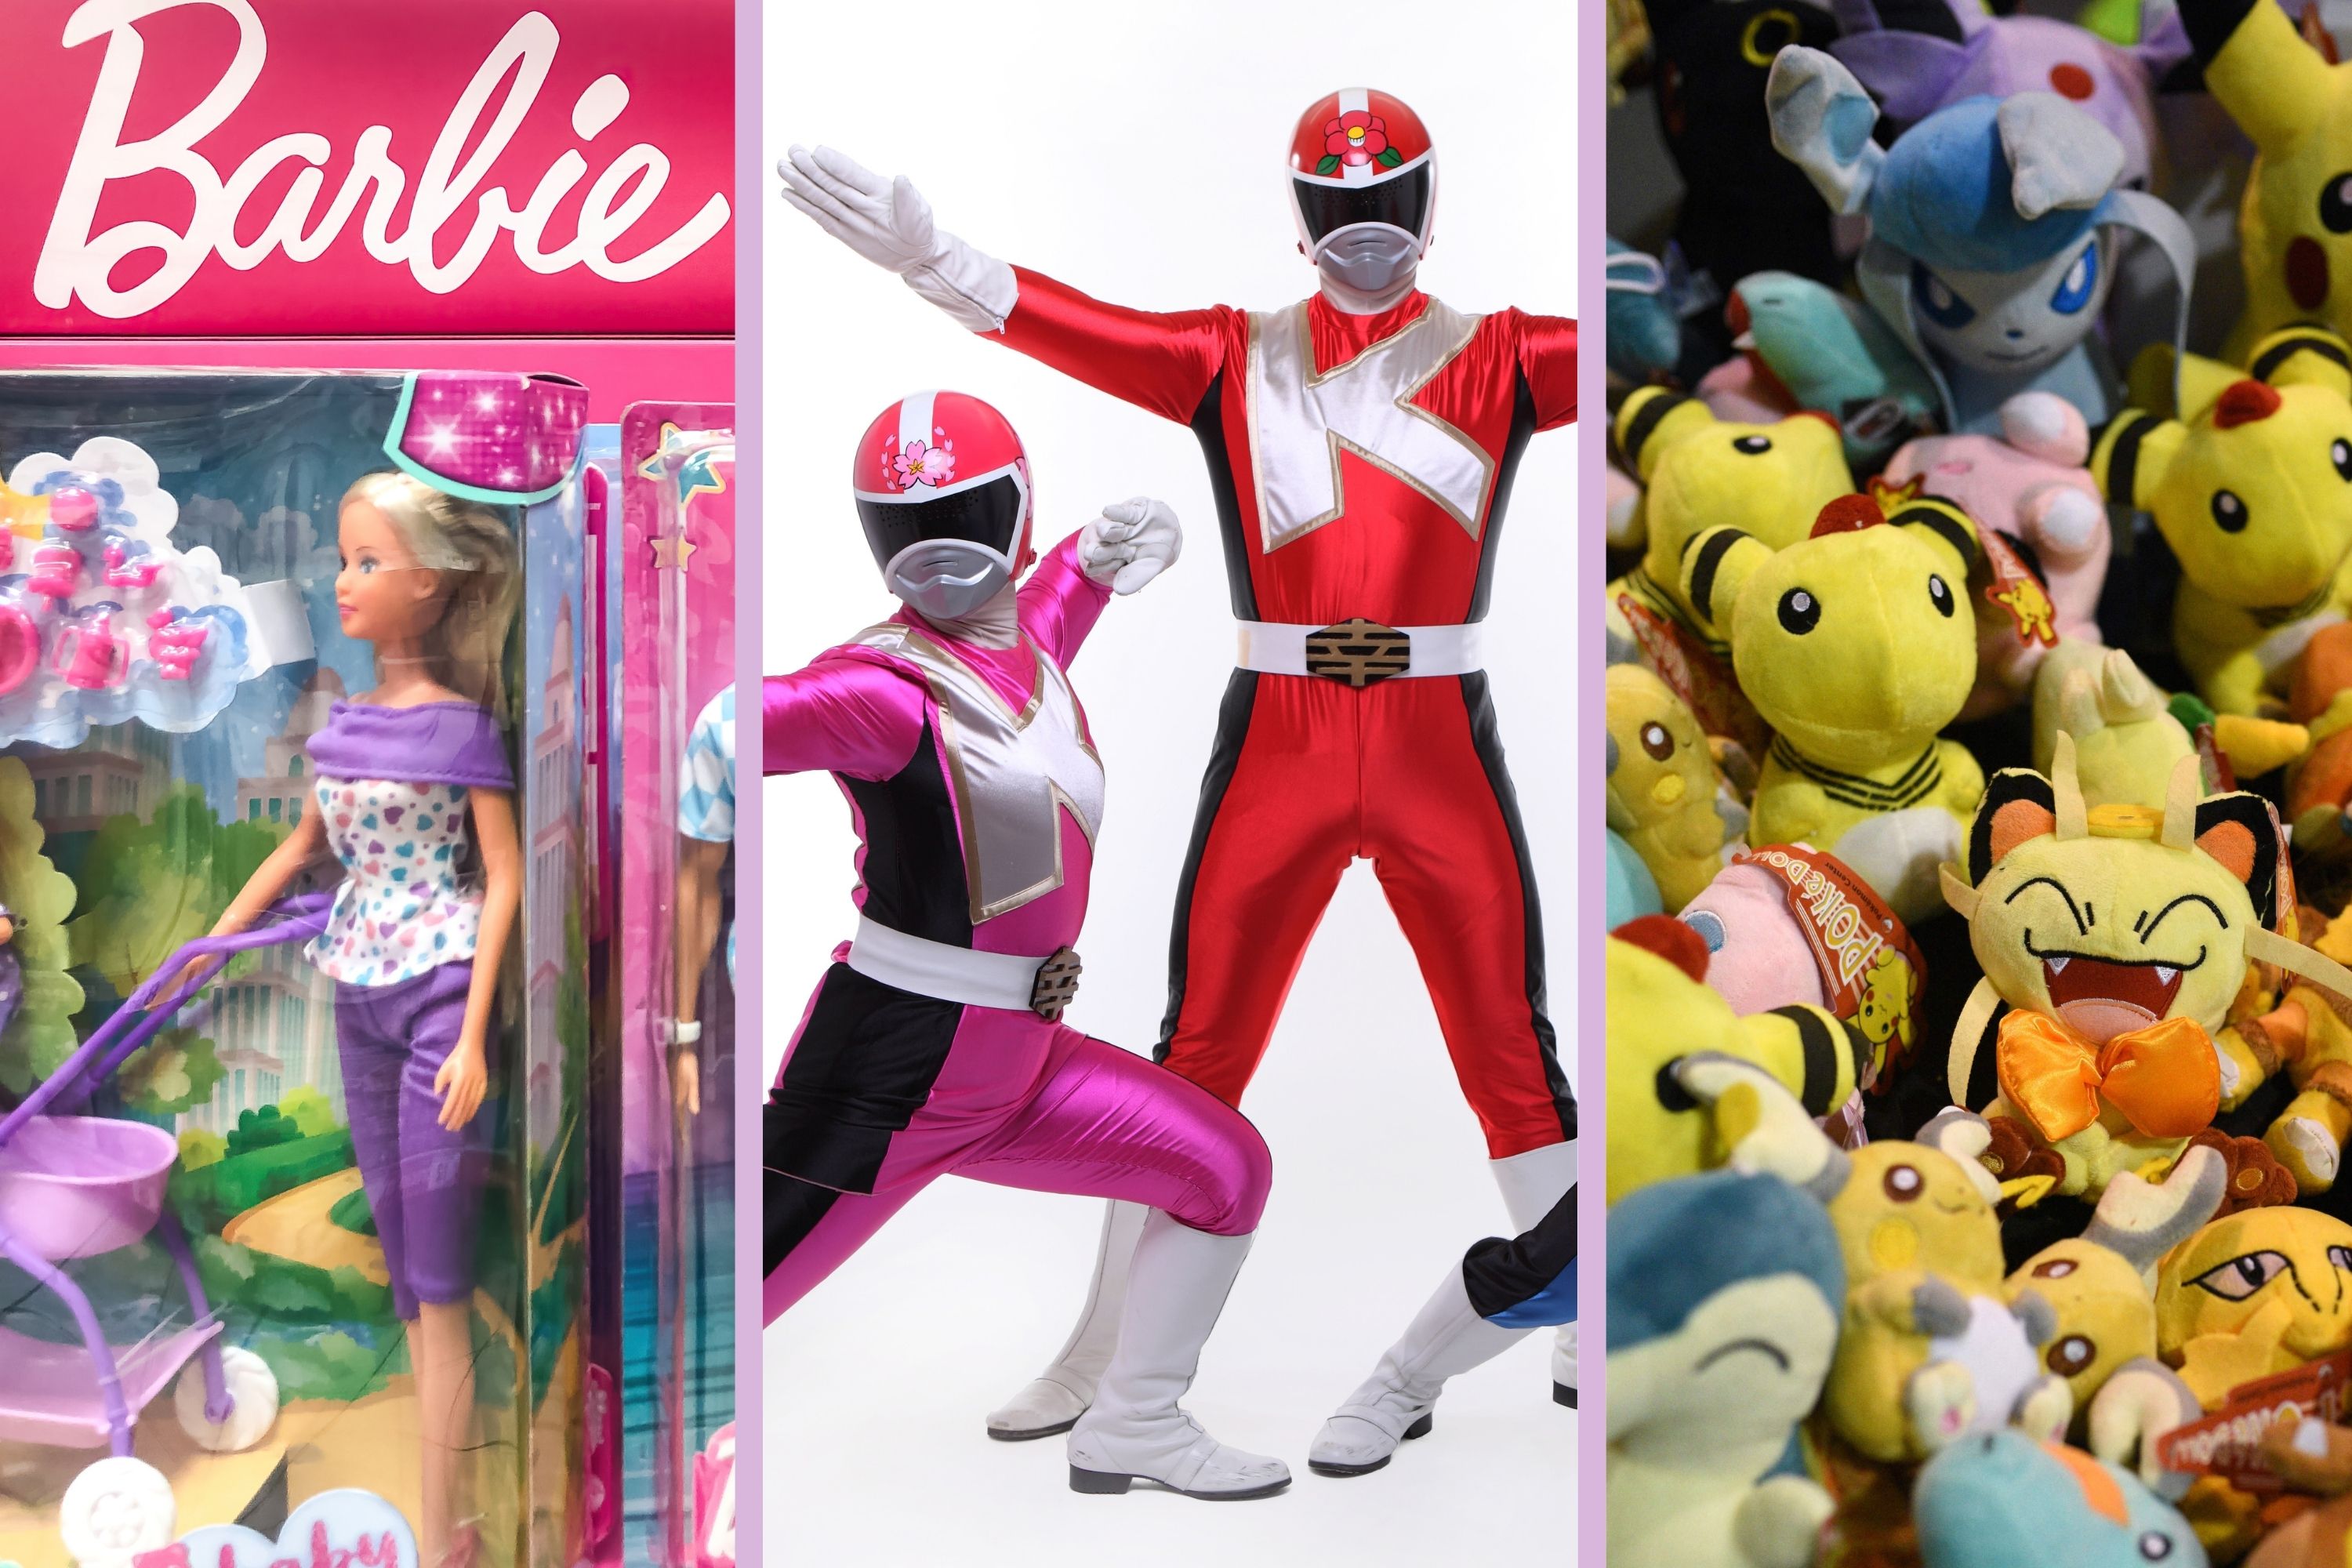  Barbie, Power Rangers and Pokemon toys 